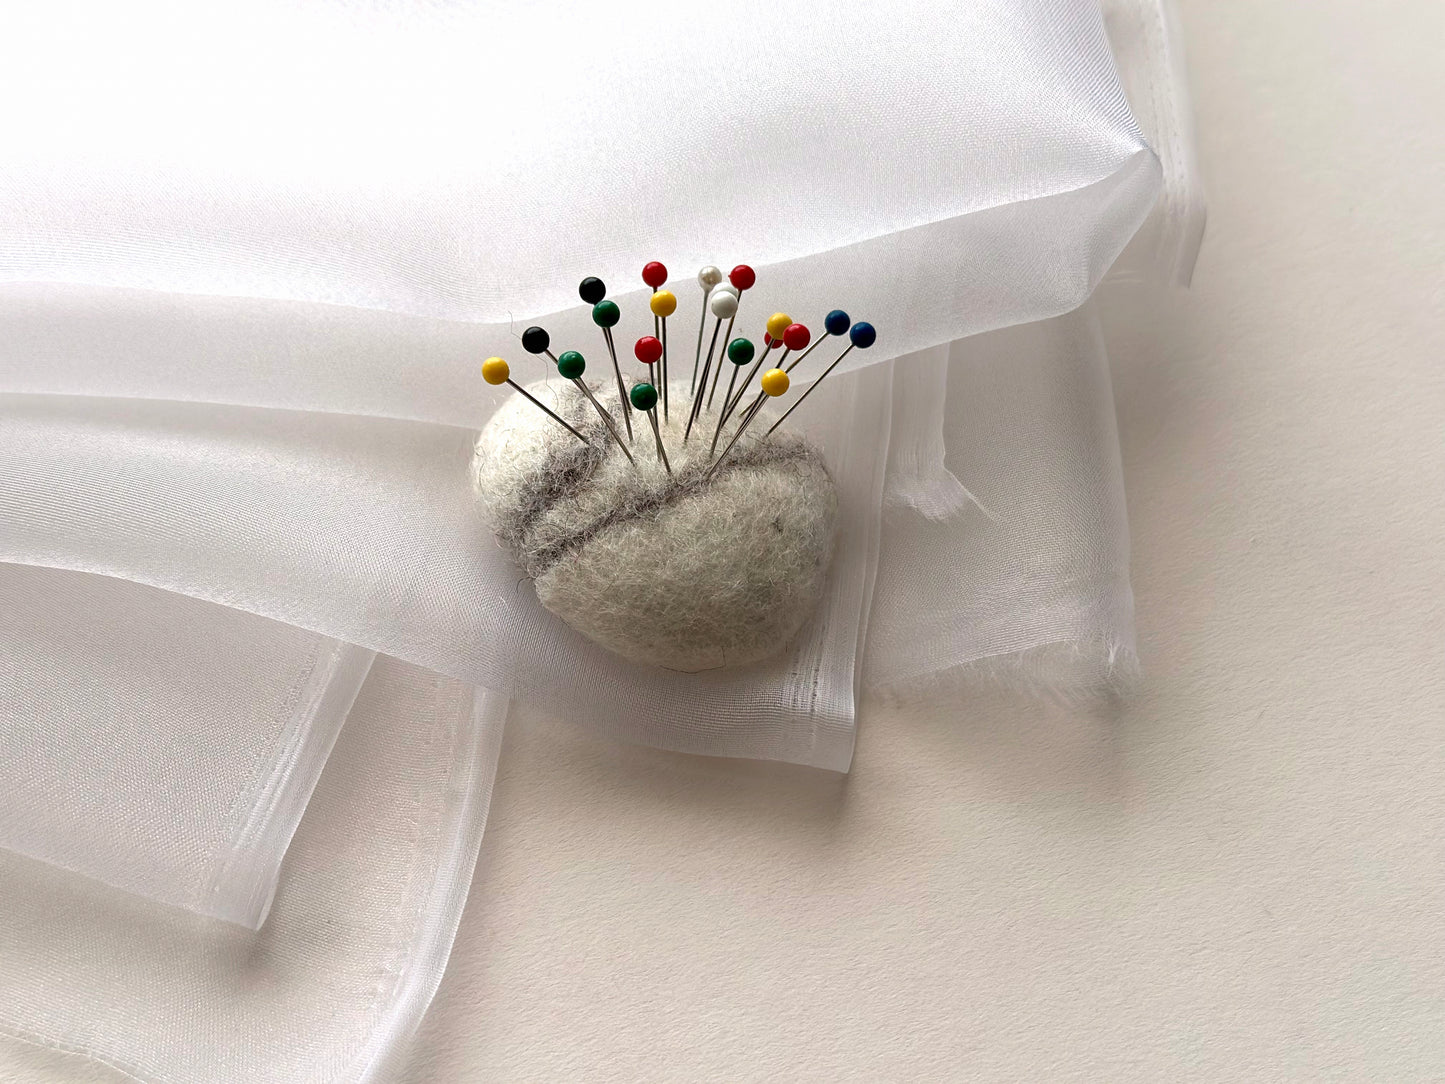 Handmade Pincushion Wool Stone With Magnet inside